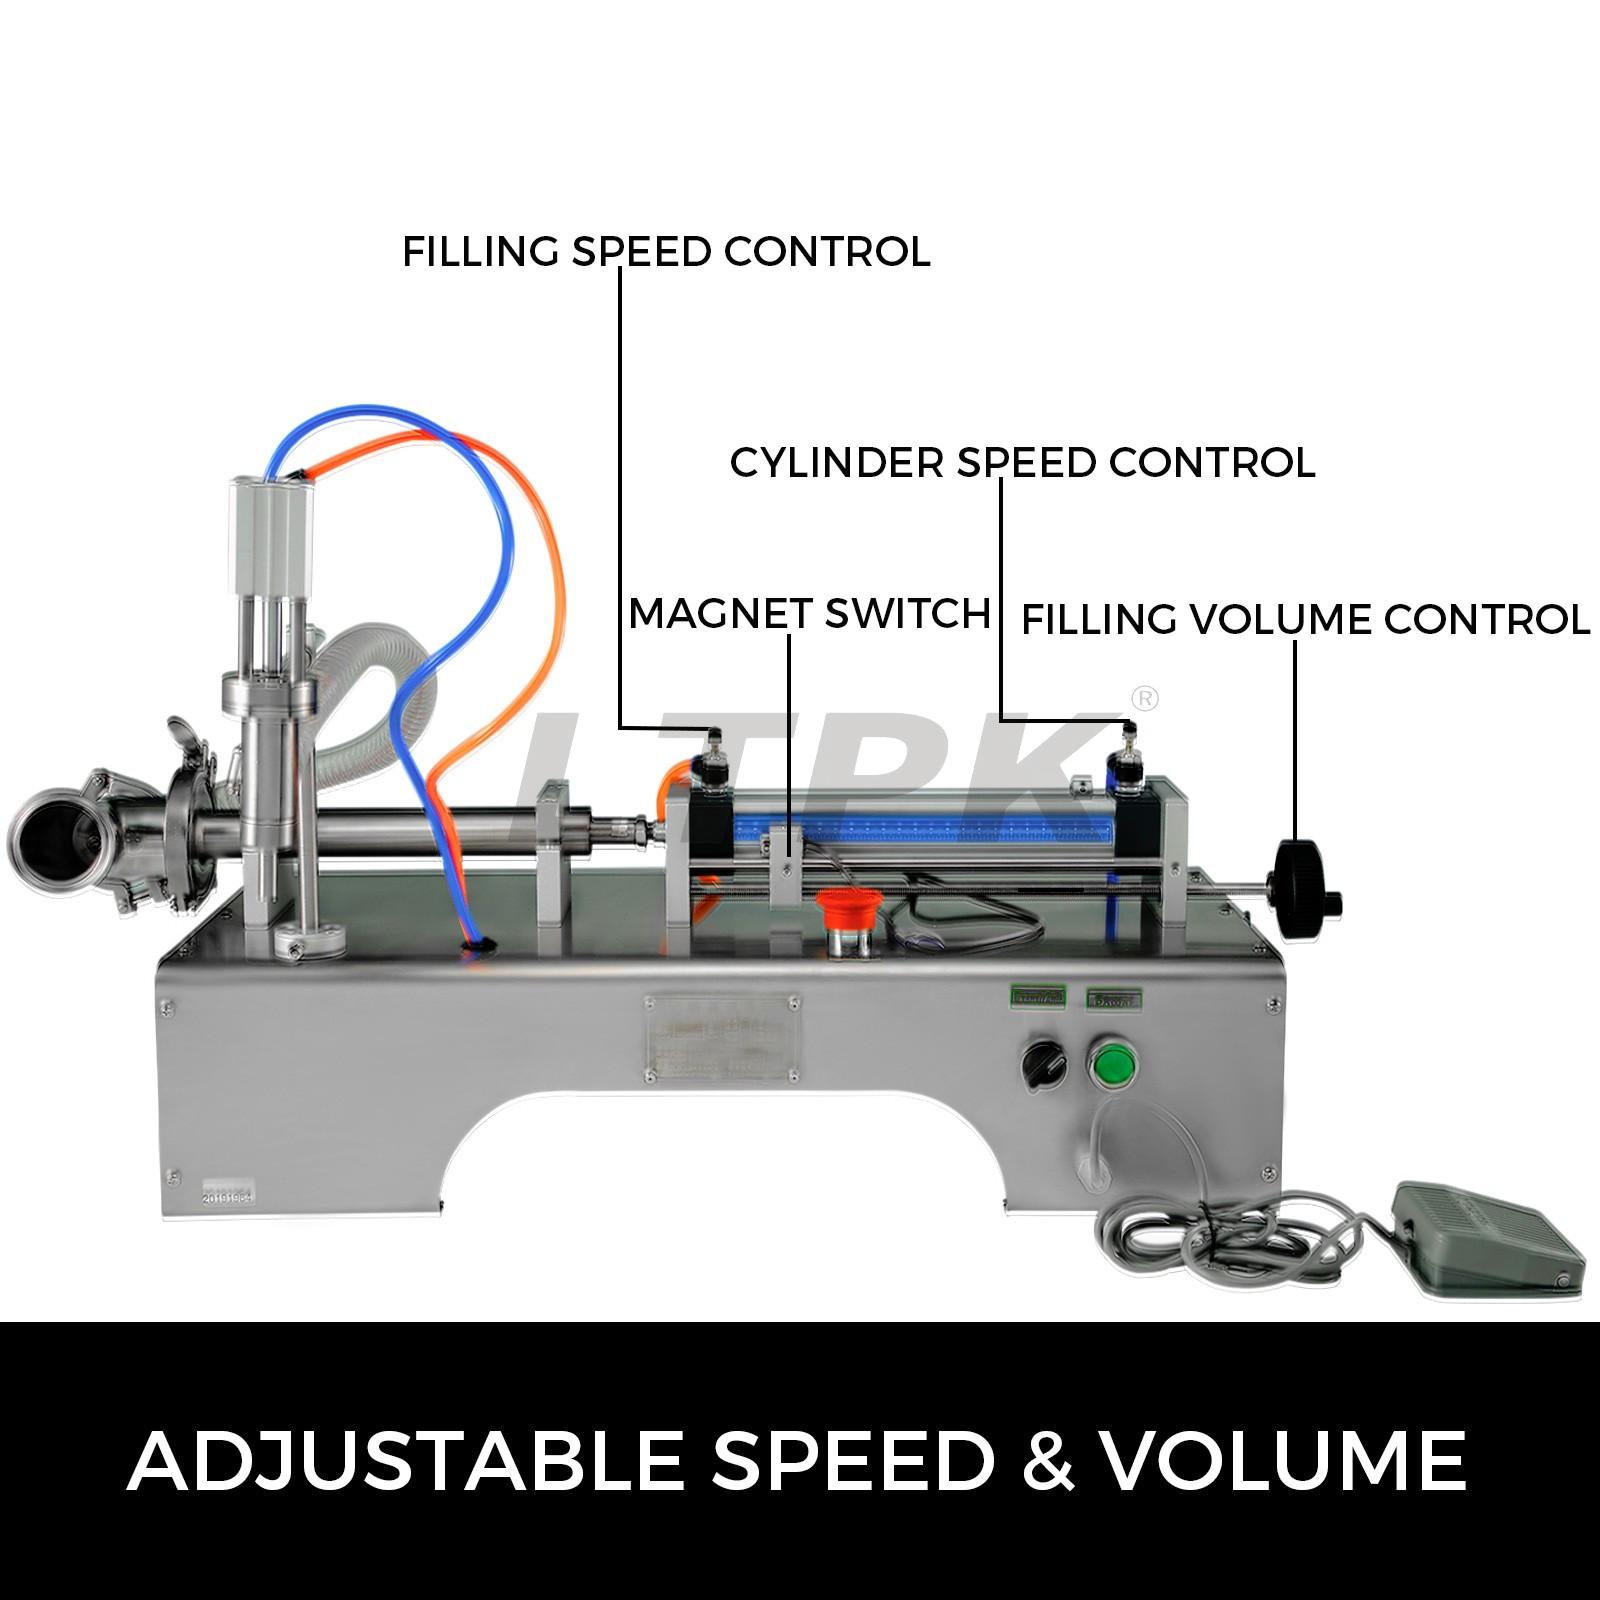 10-300ml Pneumatic single nozzles semi automatic liquid filling machine .jpg